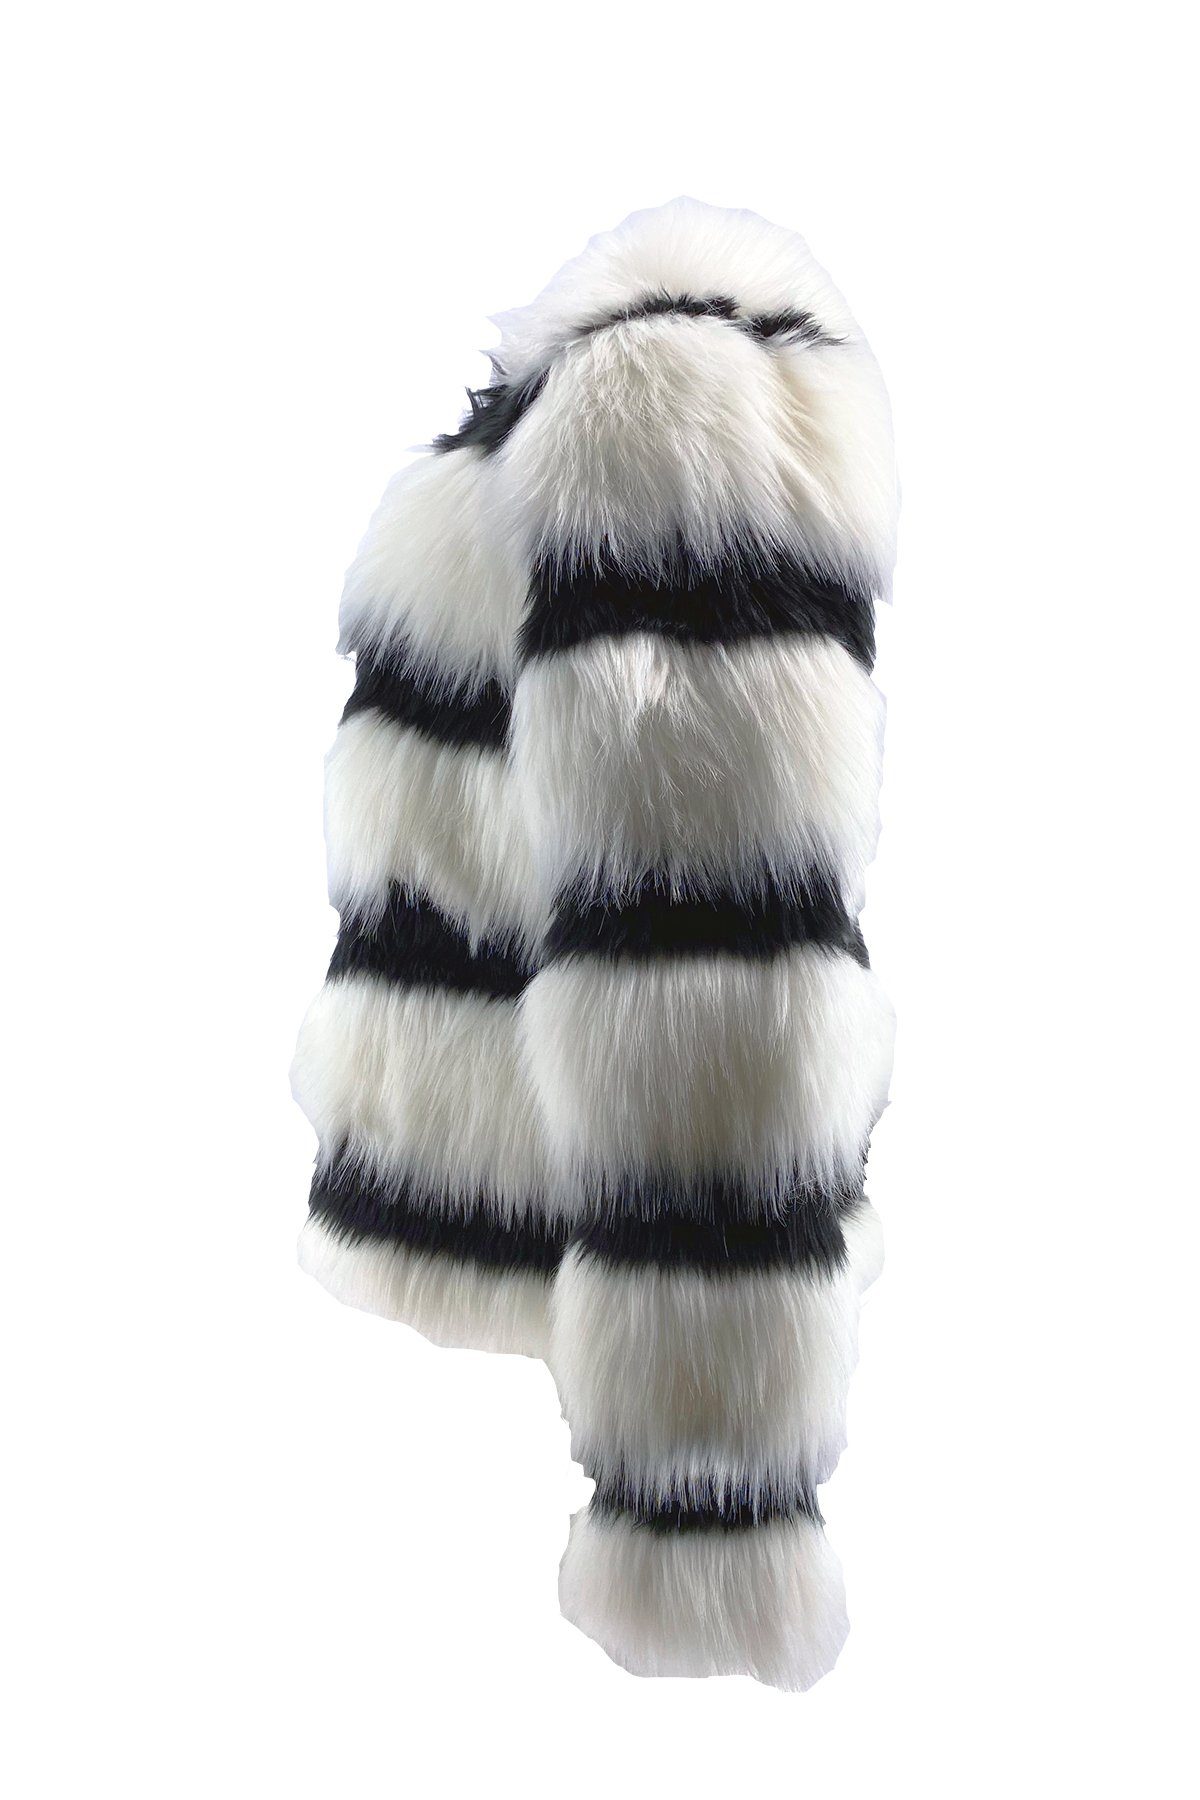 Antonio Cavosi Reißverschluss weiß-schwarz Mehrfarbige mit kuschelige Web-Pelz Fellimitatjacke Jacke